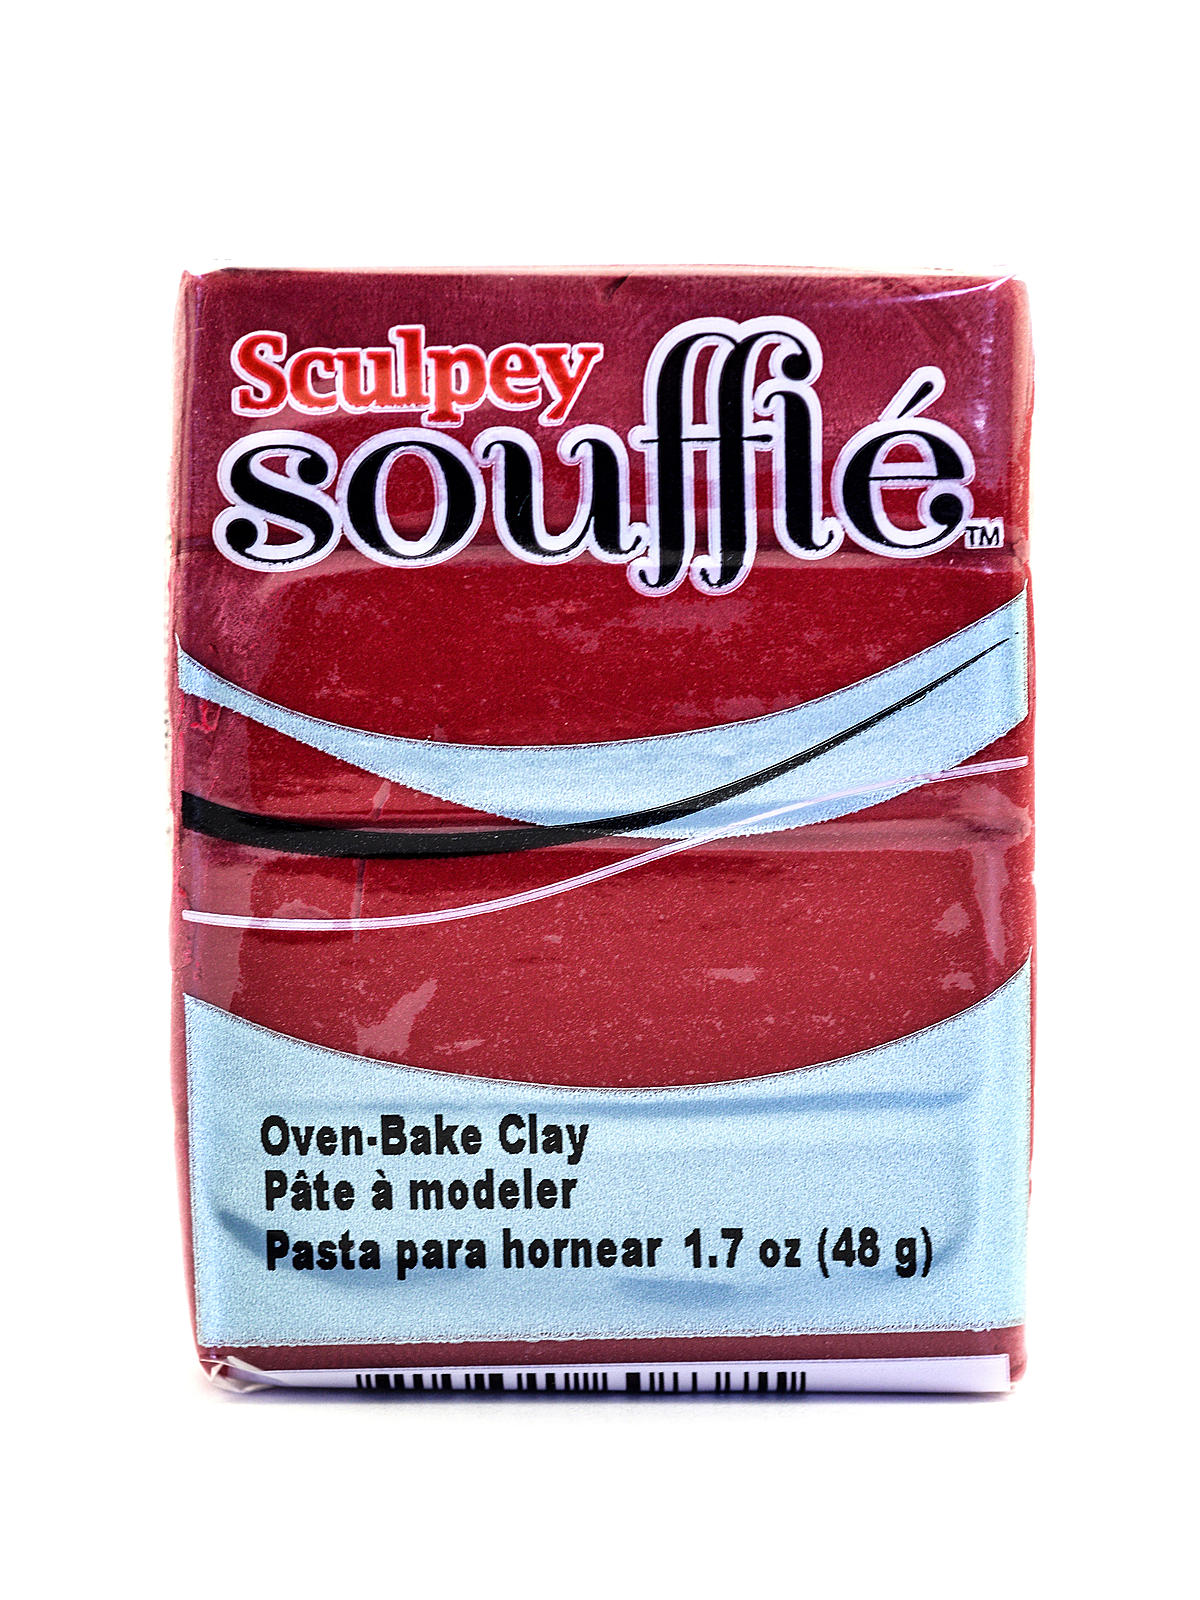 Soufflé Oven-bake Clay Cherry Pie 1.7 Oz.